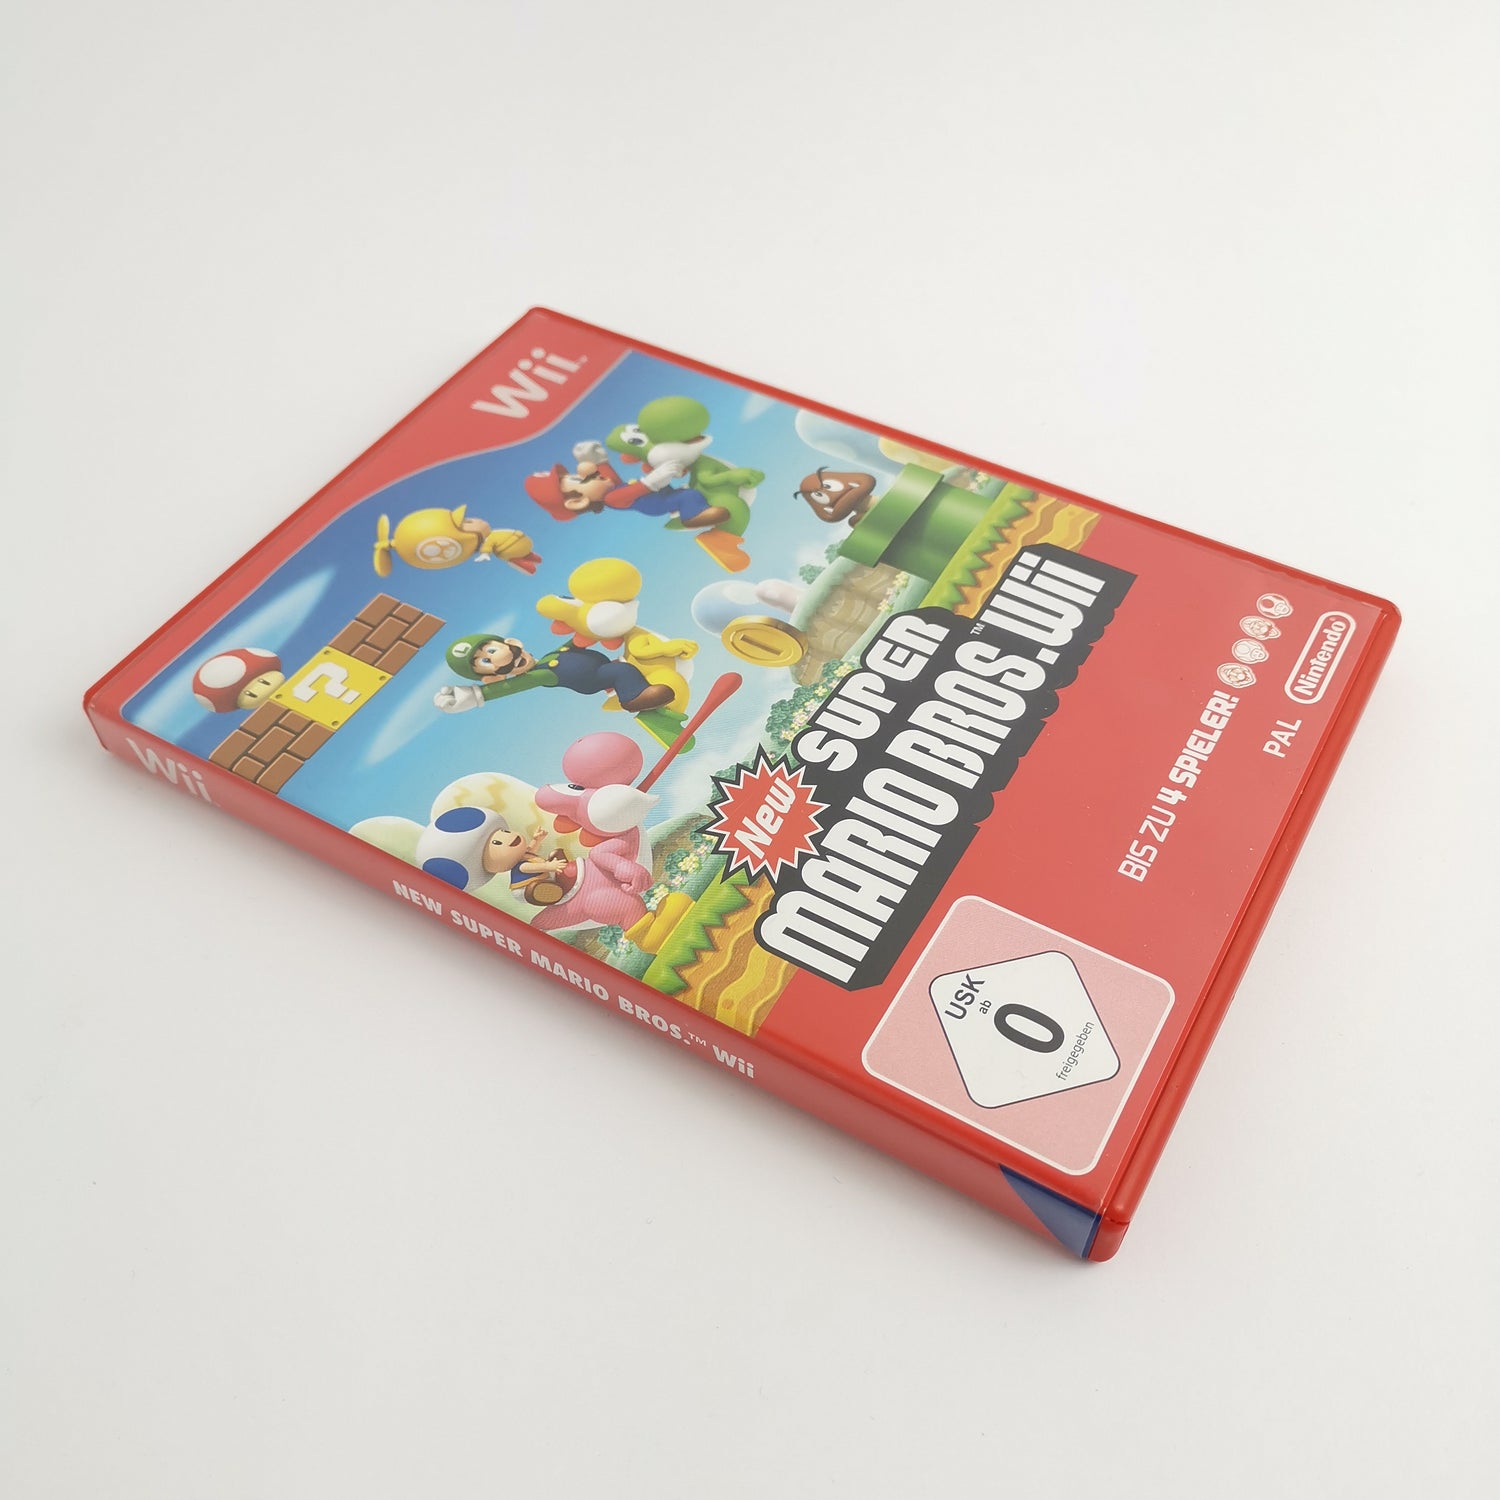 Nintendo Wii Game: New Super Mario Bros. | Wii & Wii U - German PAL version orig